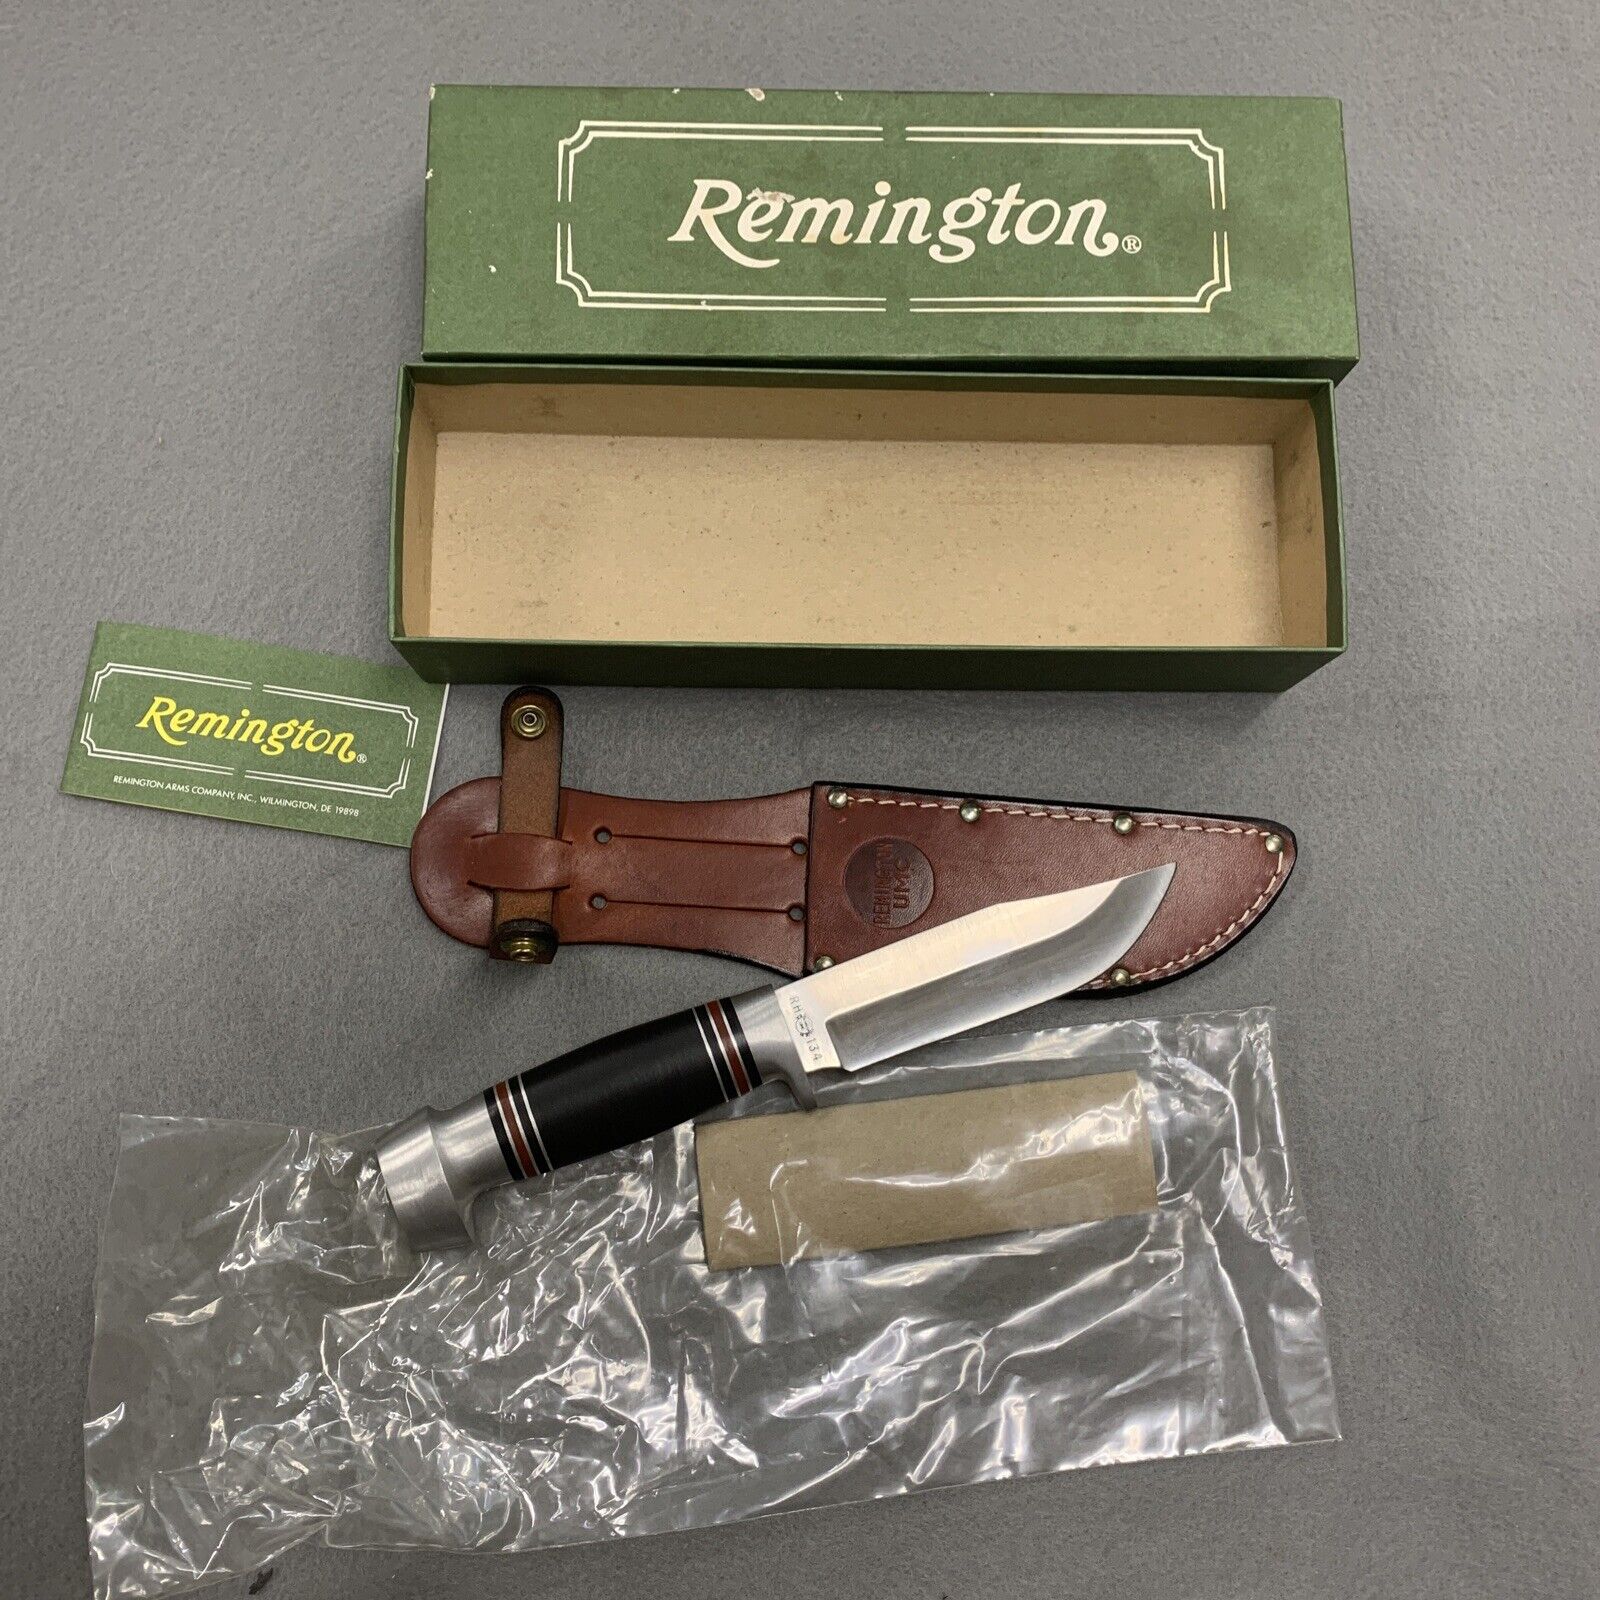 Remington RH-134 fixed blade knife 